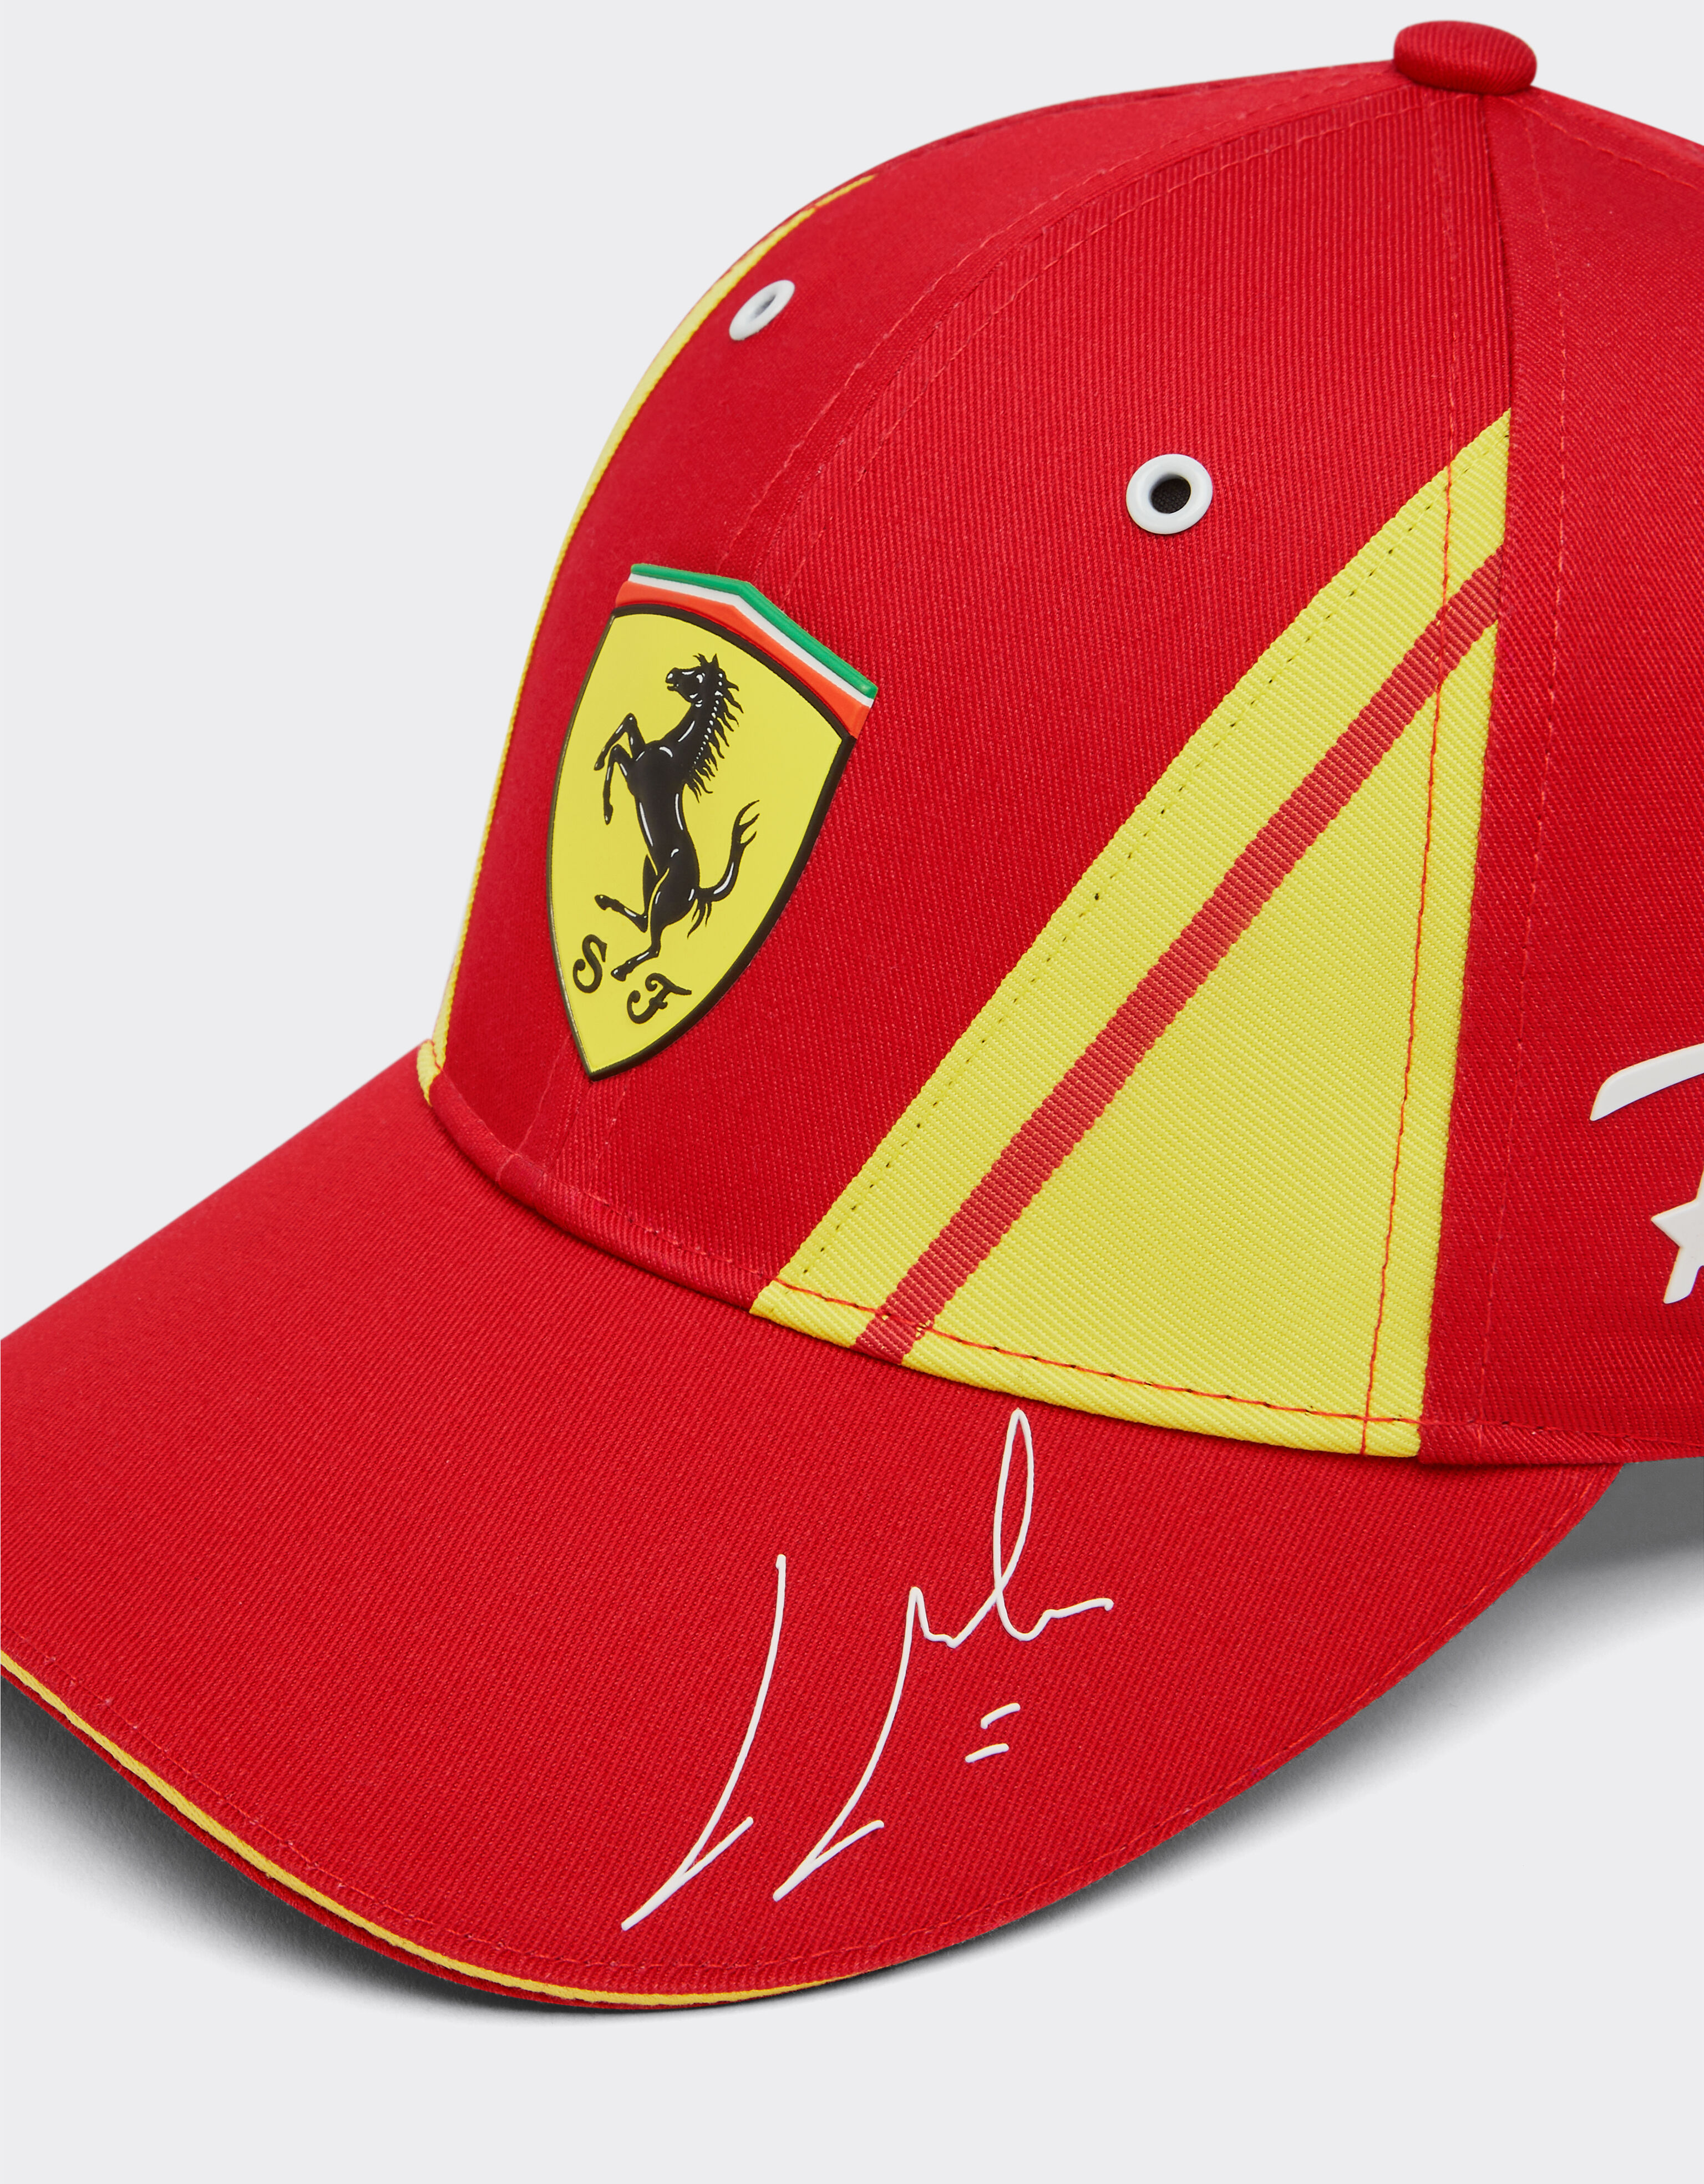 Ferrari Ferrari Molina Hypercar Hat - Limited Edition Red F1323f